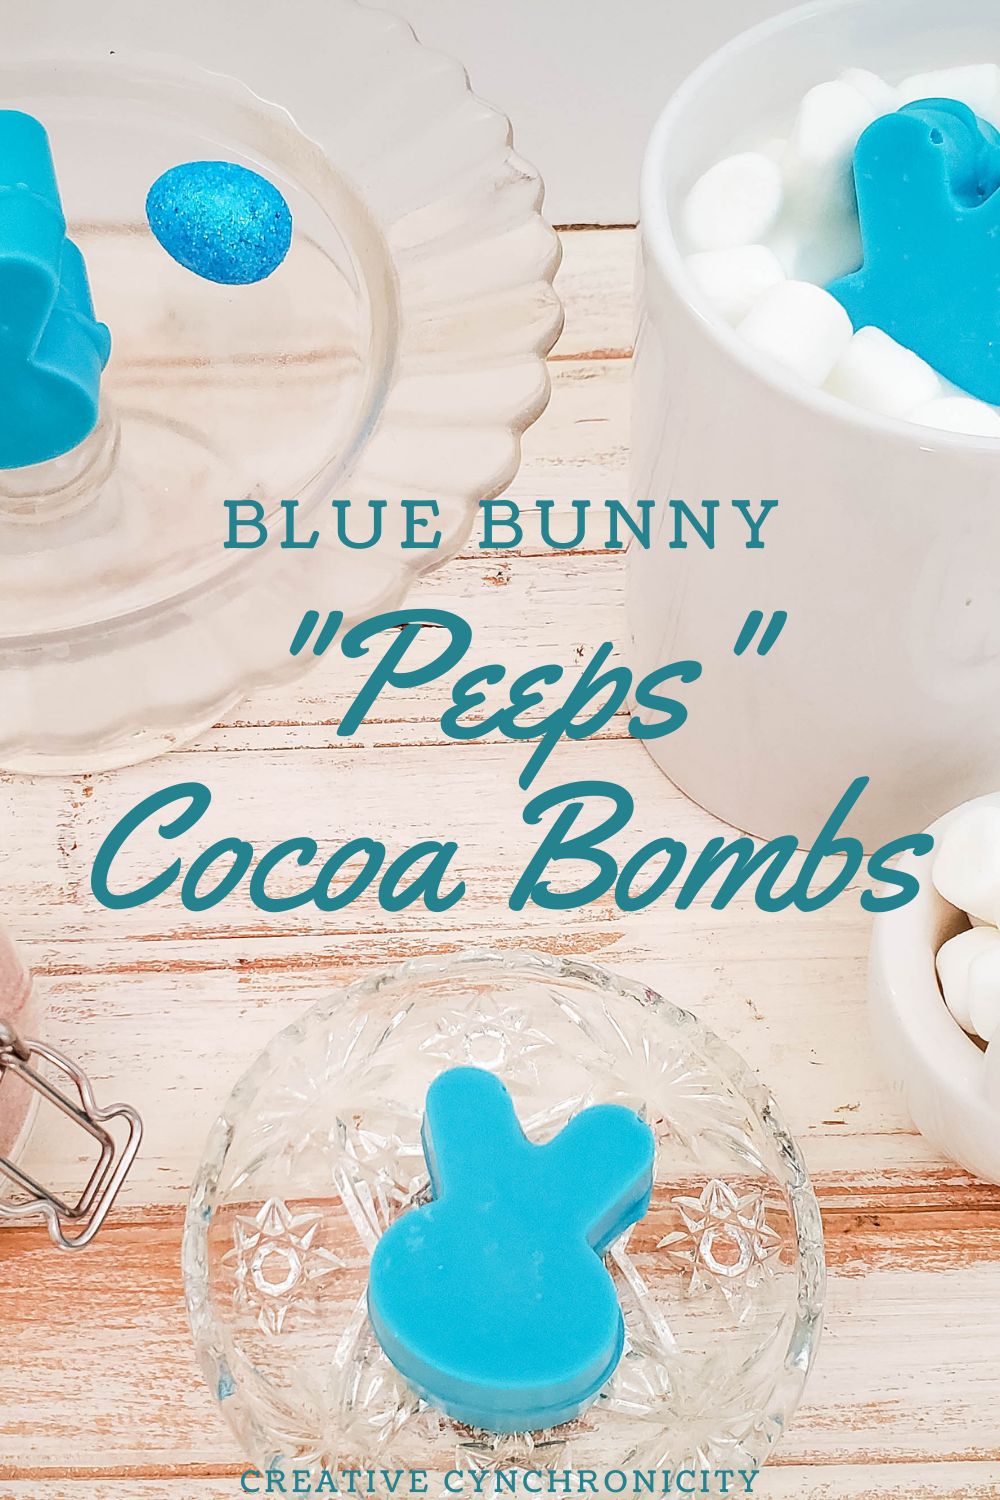 Blue Bunny "Peeps" Cocoa Bombs